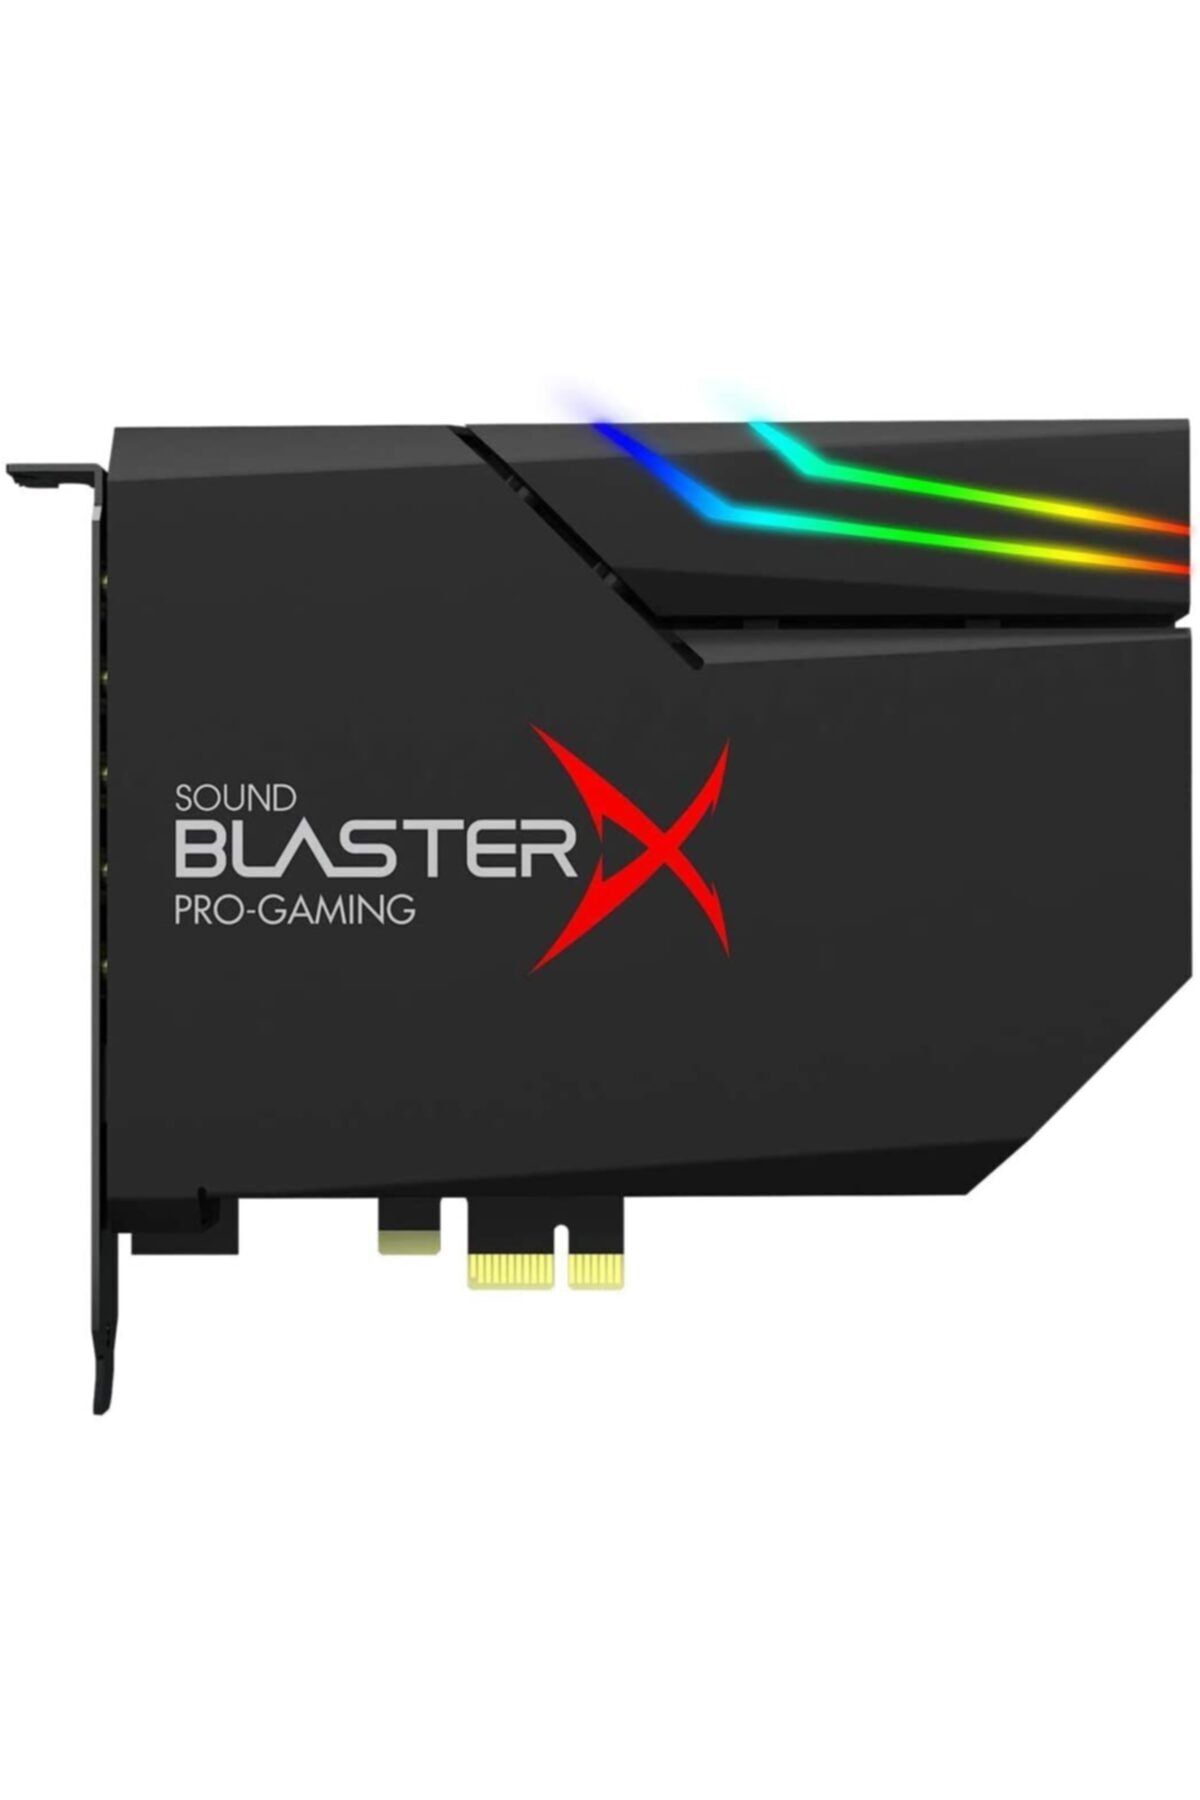 Blaster ae 5 plus. Creative Sound Blaster AE-5. Creative Sound Blaster AE-5 Plus. Звуковая карта PCI-E Creative BLASTERX AE-5 Plus (70sb174000003). Внутренняя звуковая карта Creative Sound BLASTERX AE-5 Plus.